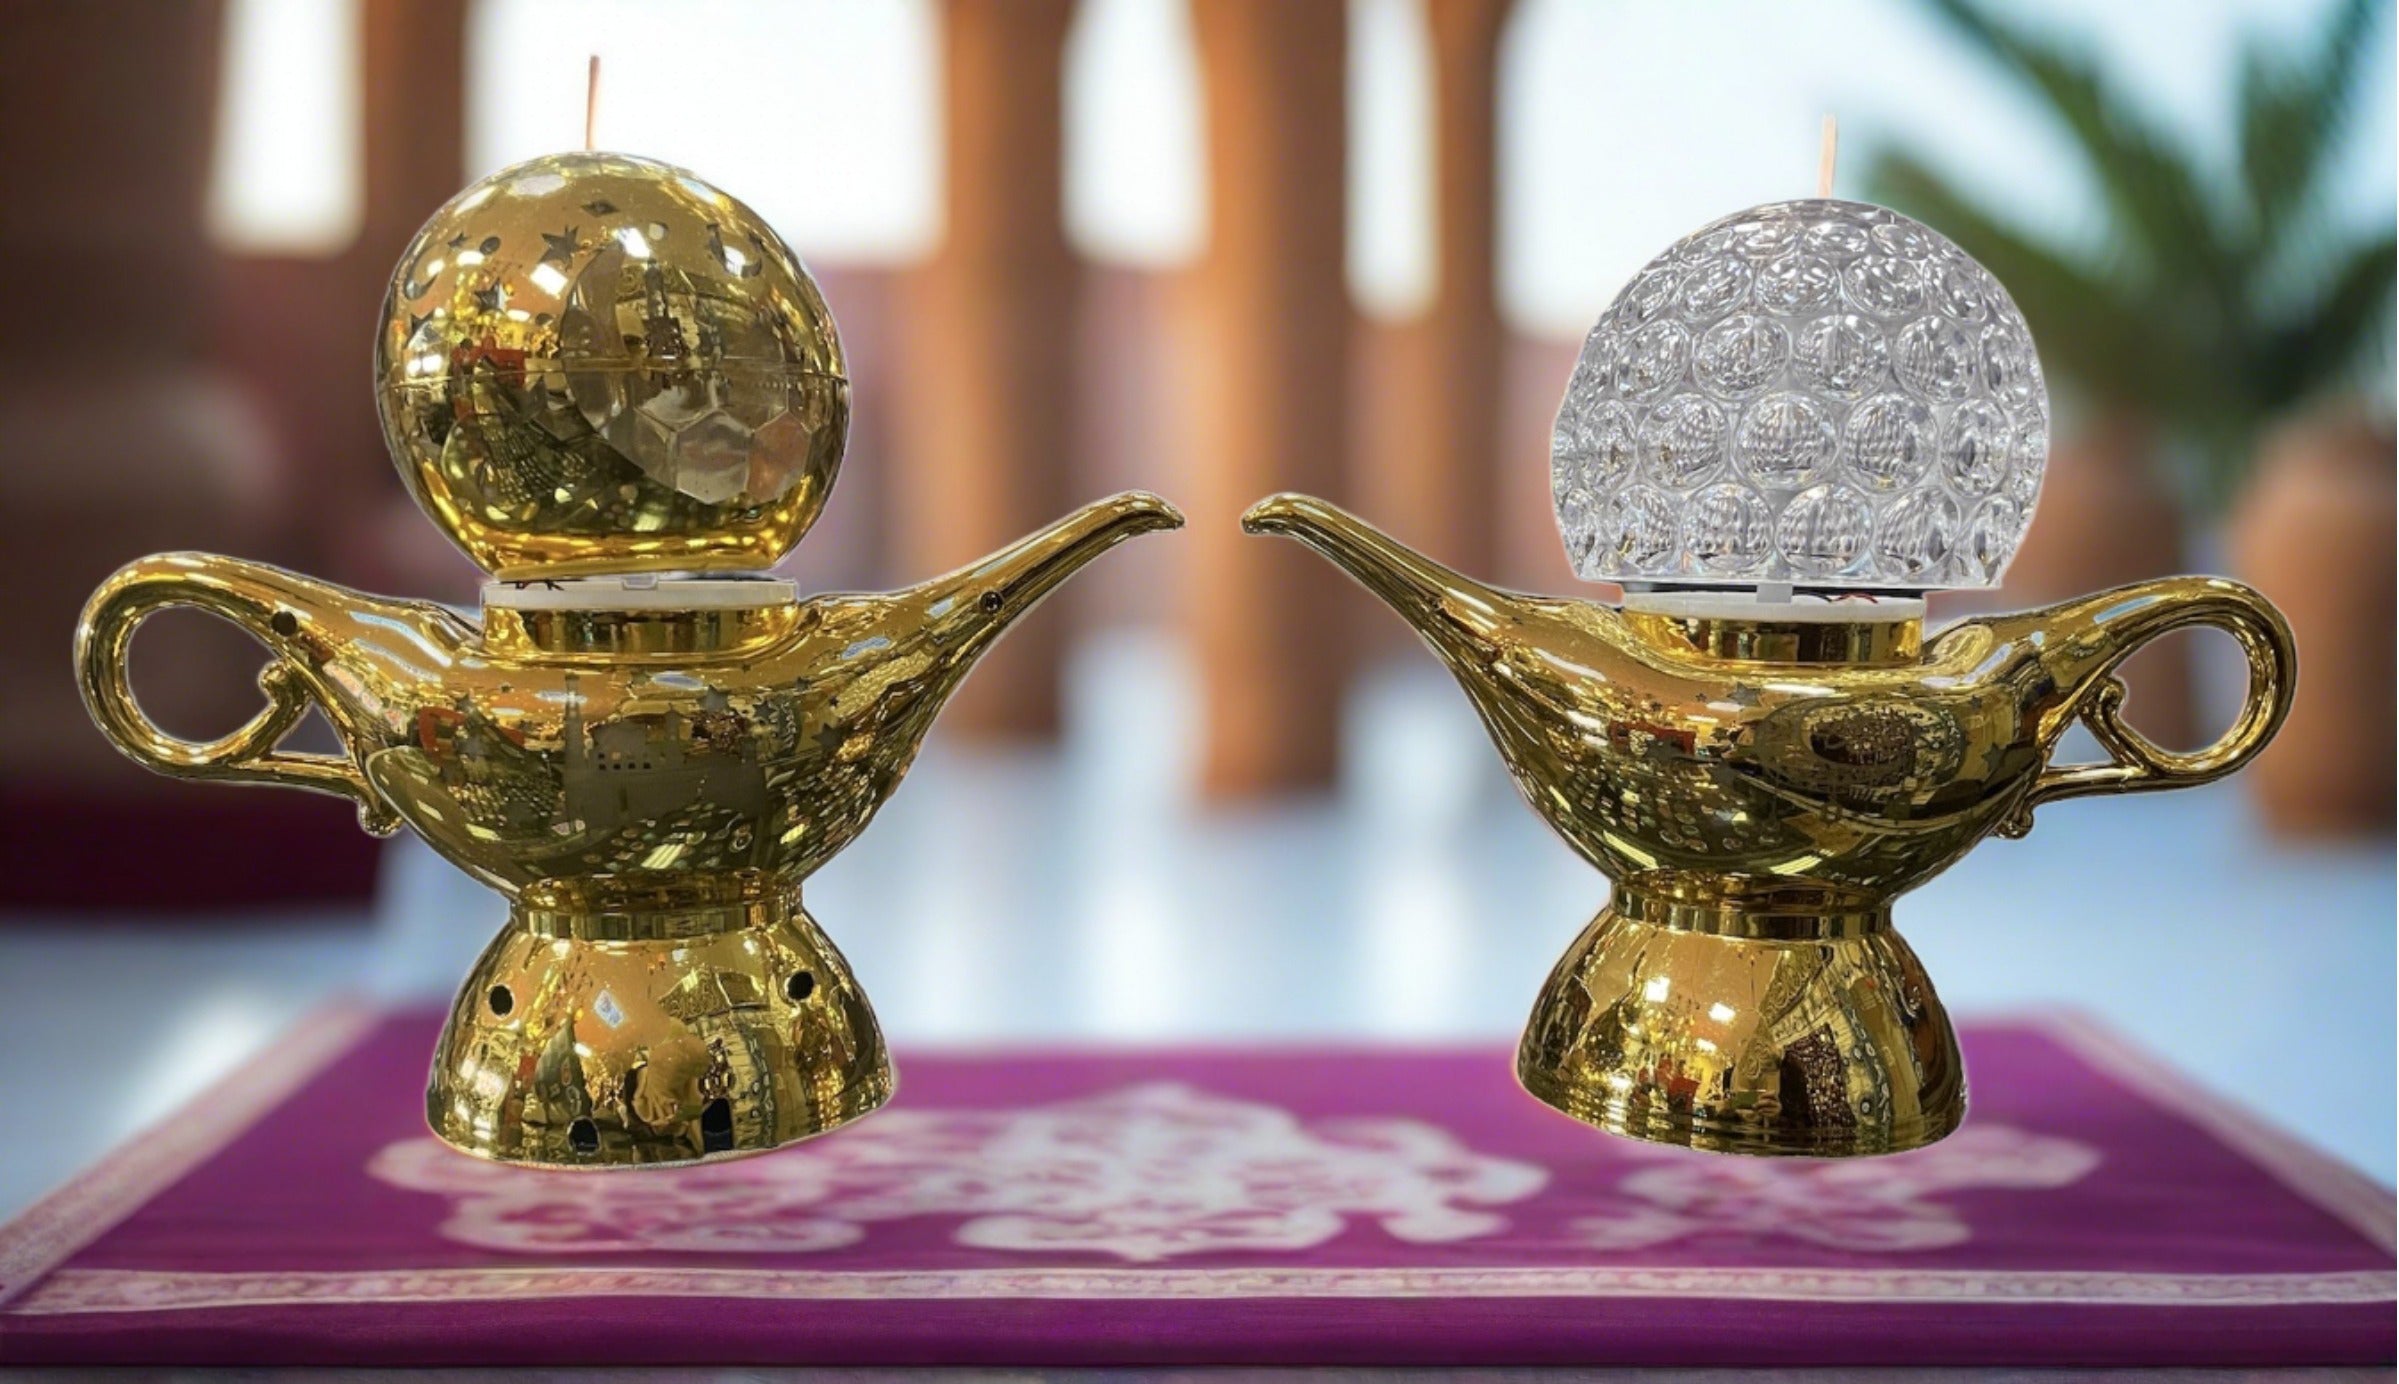 Gold Fancy Ramadan Oil Lantern with Light-Up Globe Table Decor